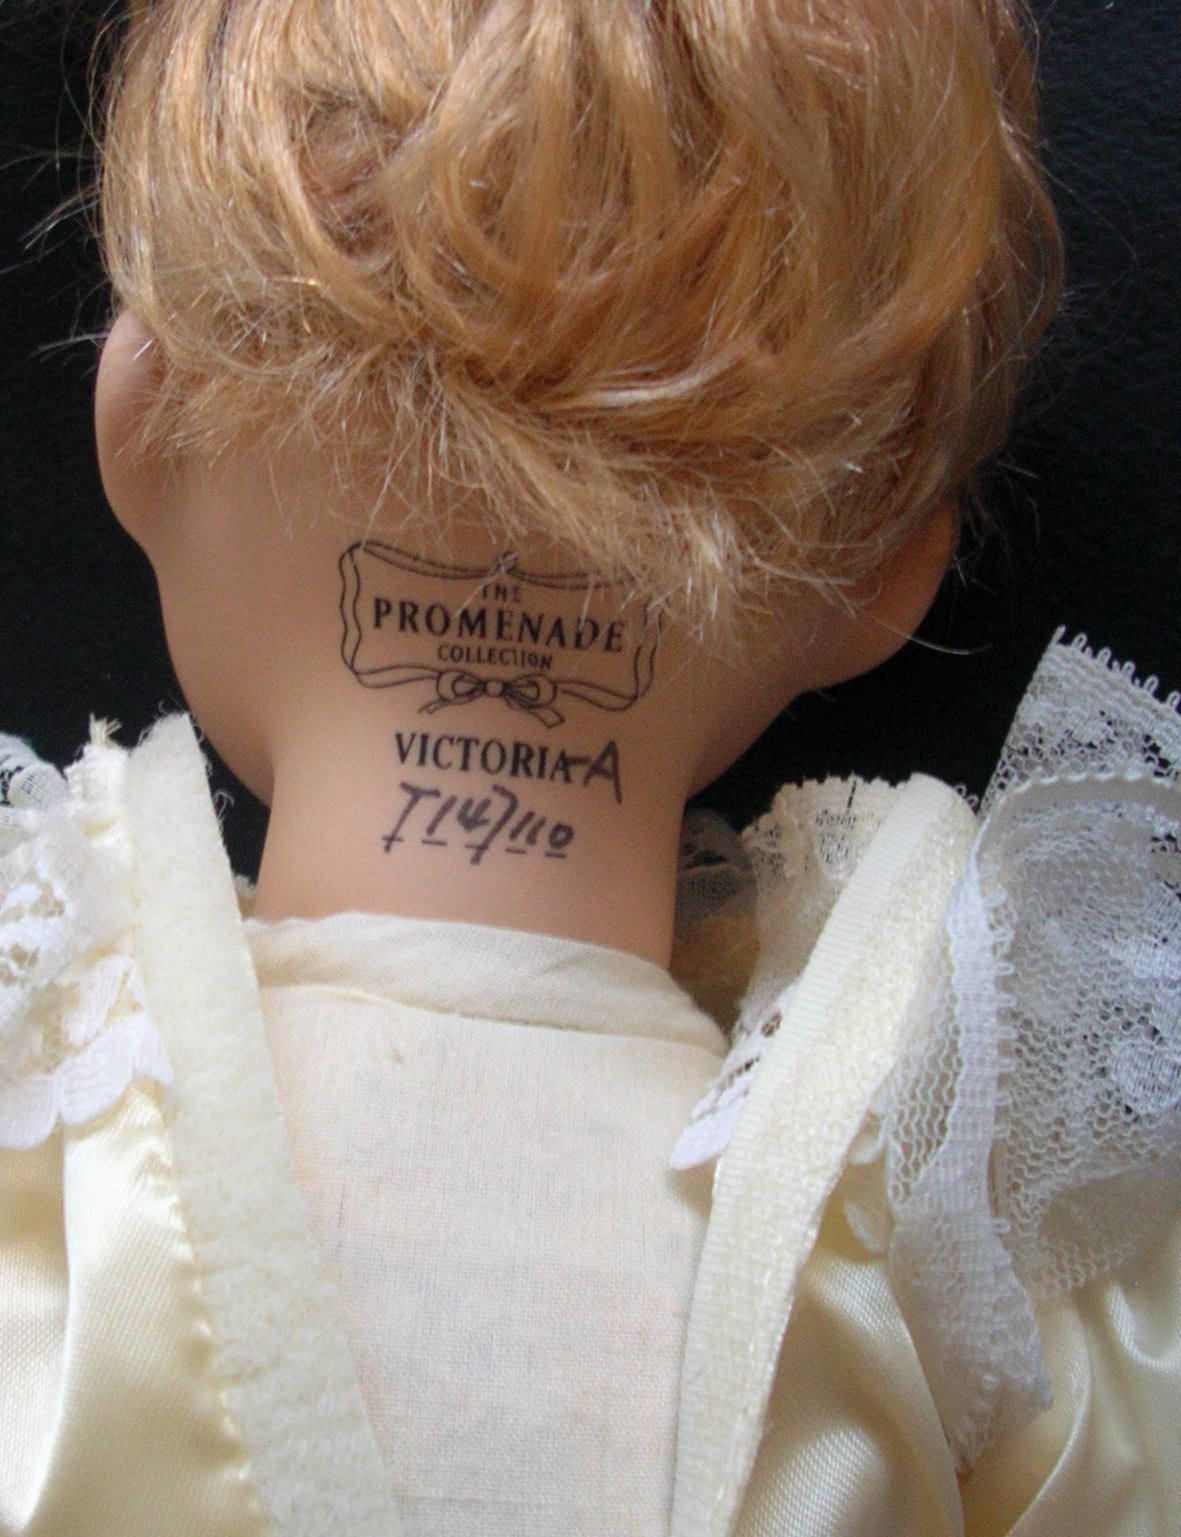 the promenade collection porcelain dolls